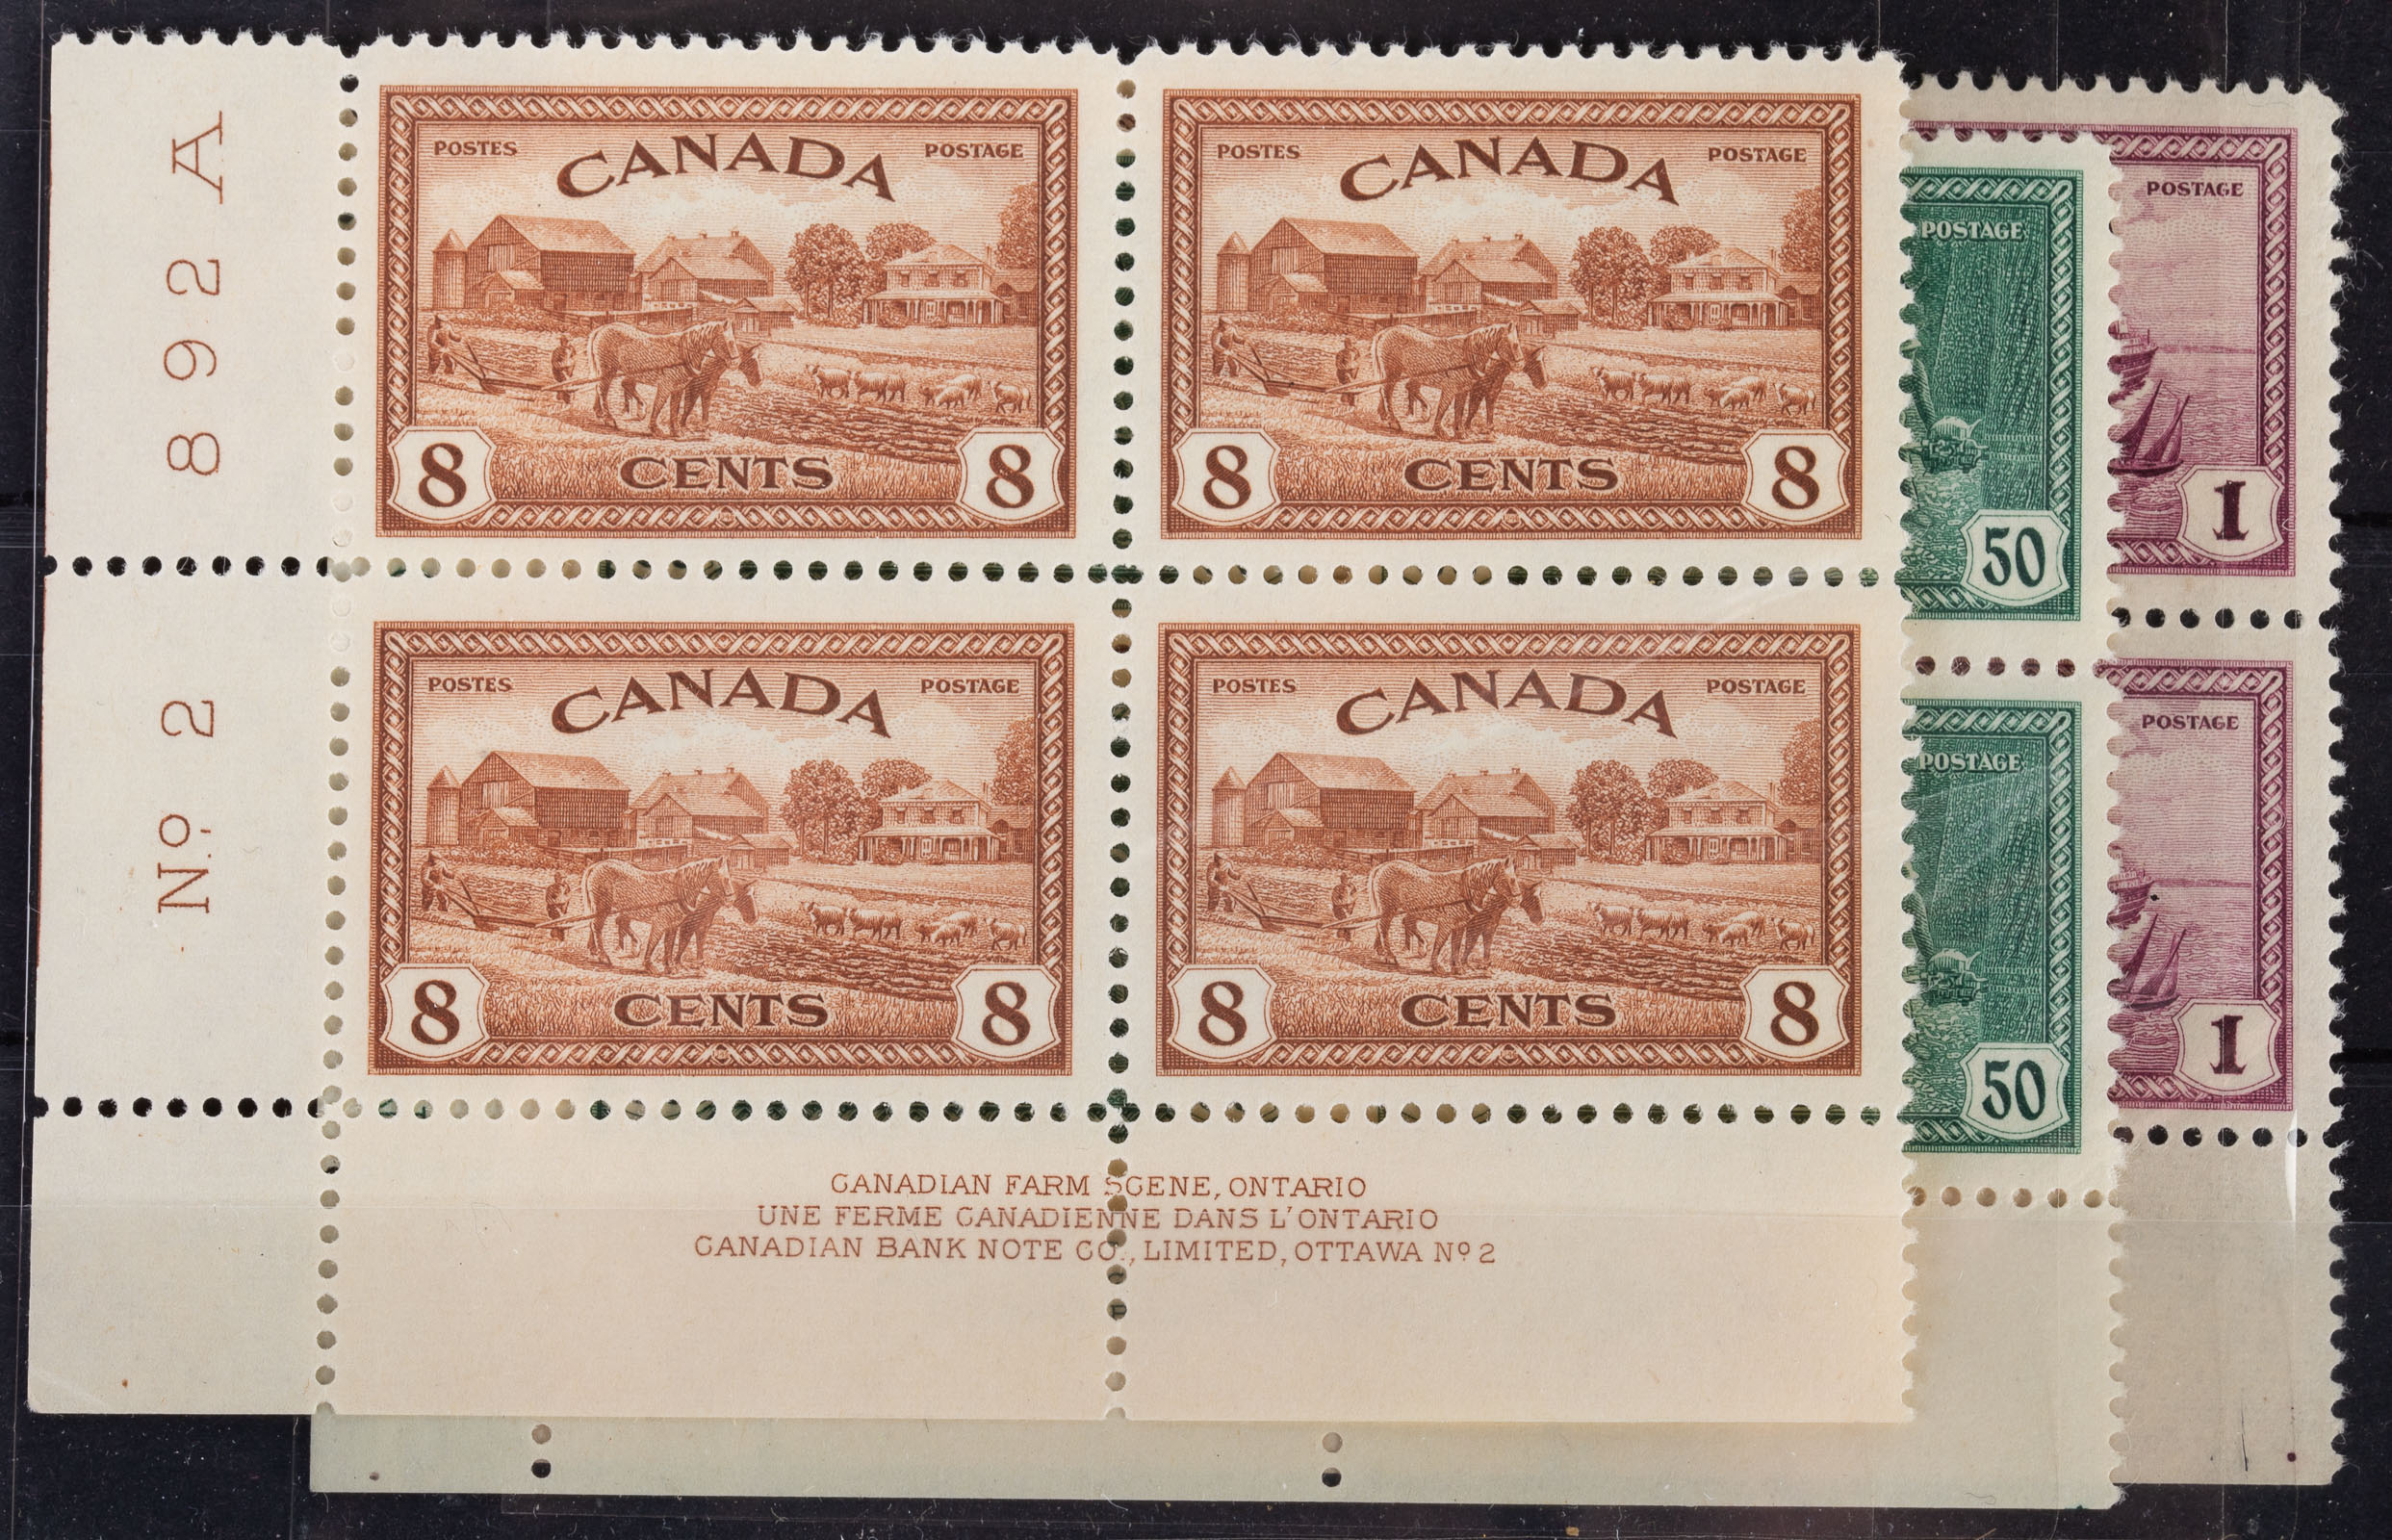 CANADA POSTAGE STAMP BLOCKS, 1946